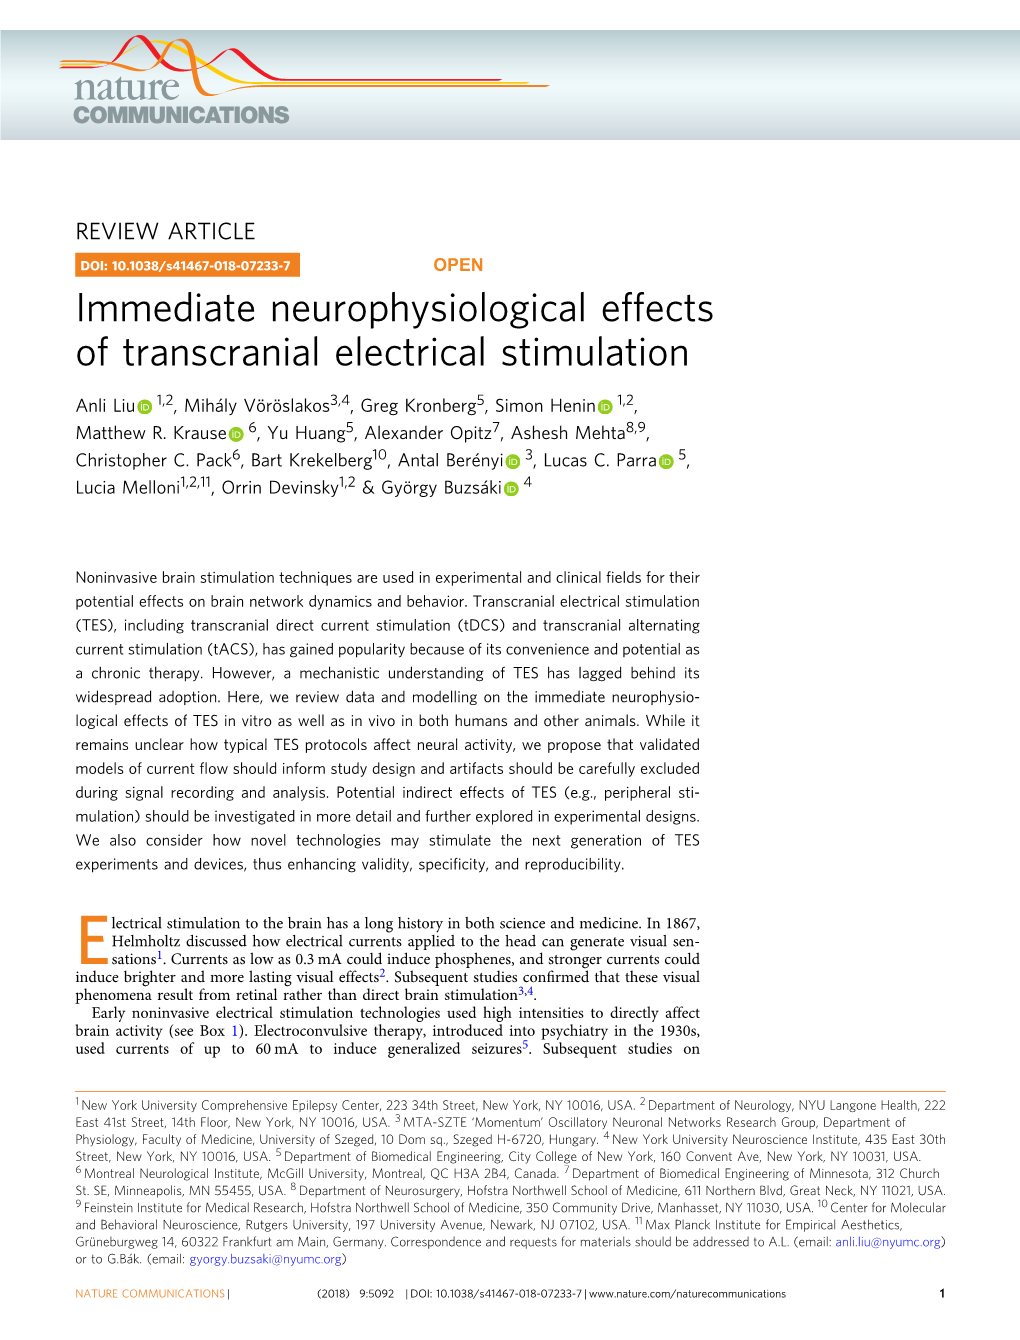 Immediate Neurophysiological Effects of Transcranial Electrical Stimulation